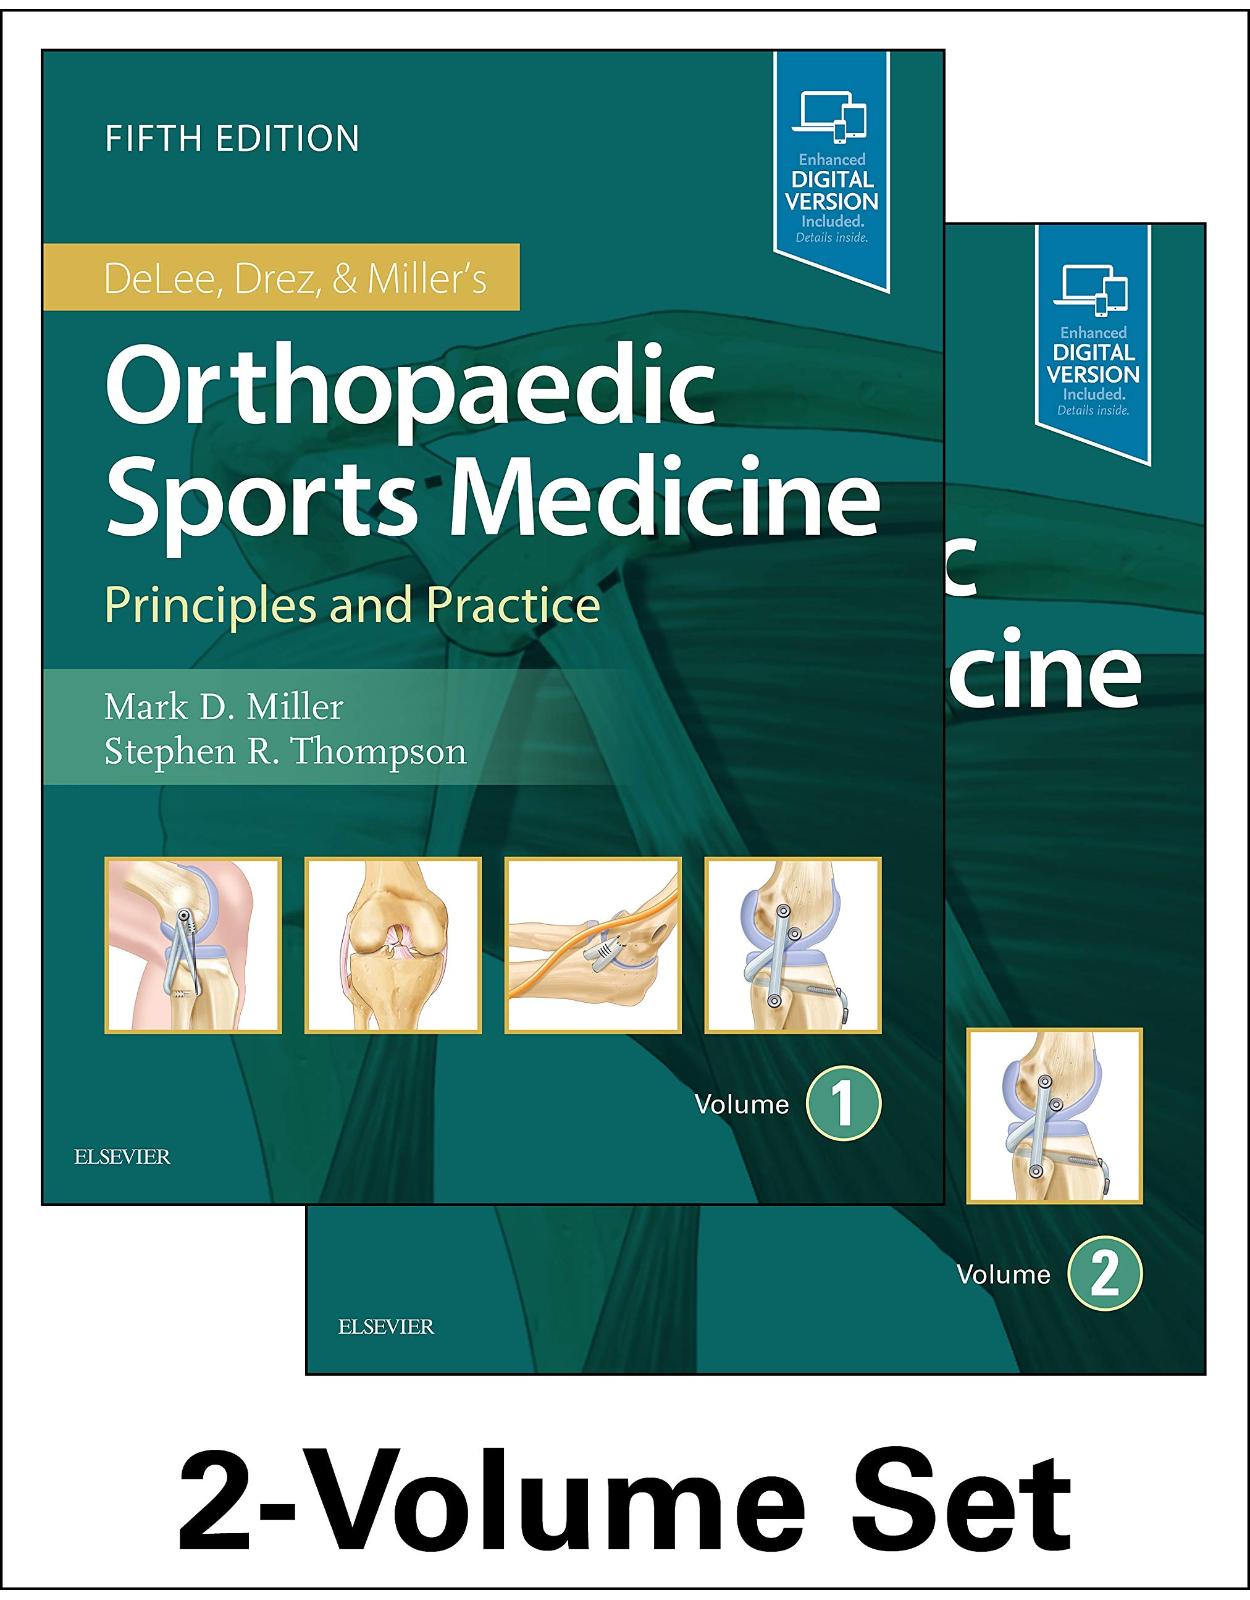 DeLee, Drez & Miller’s Orthopaedic Sports Medicine: 2-Volume Set, 5e